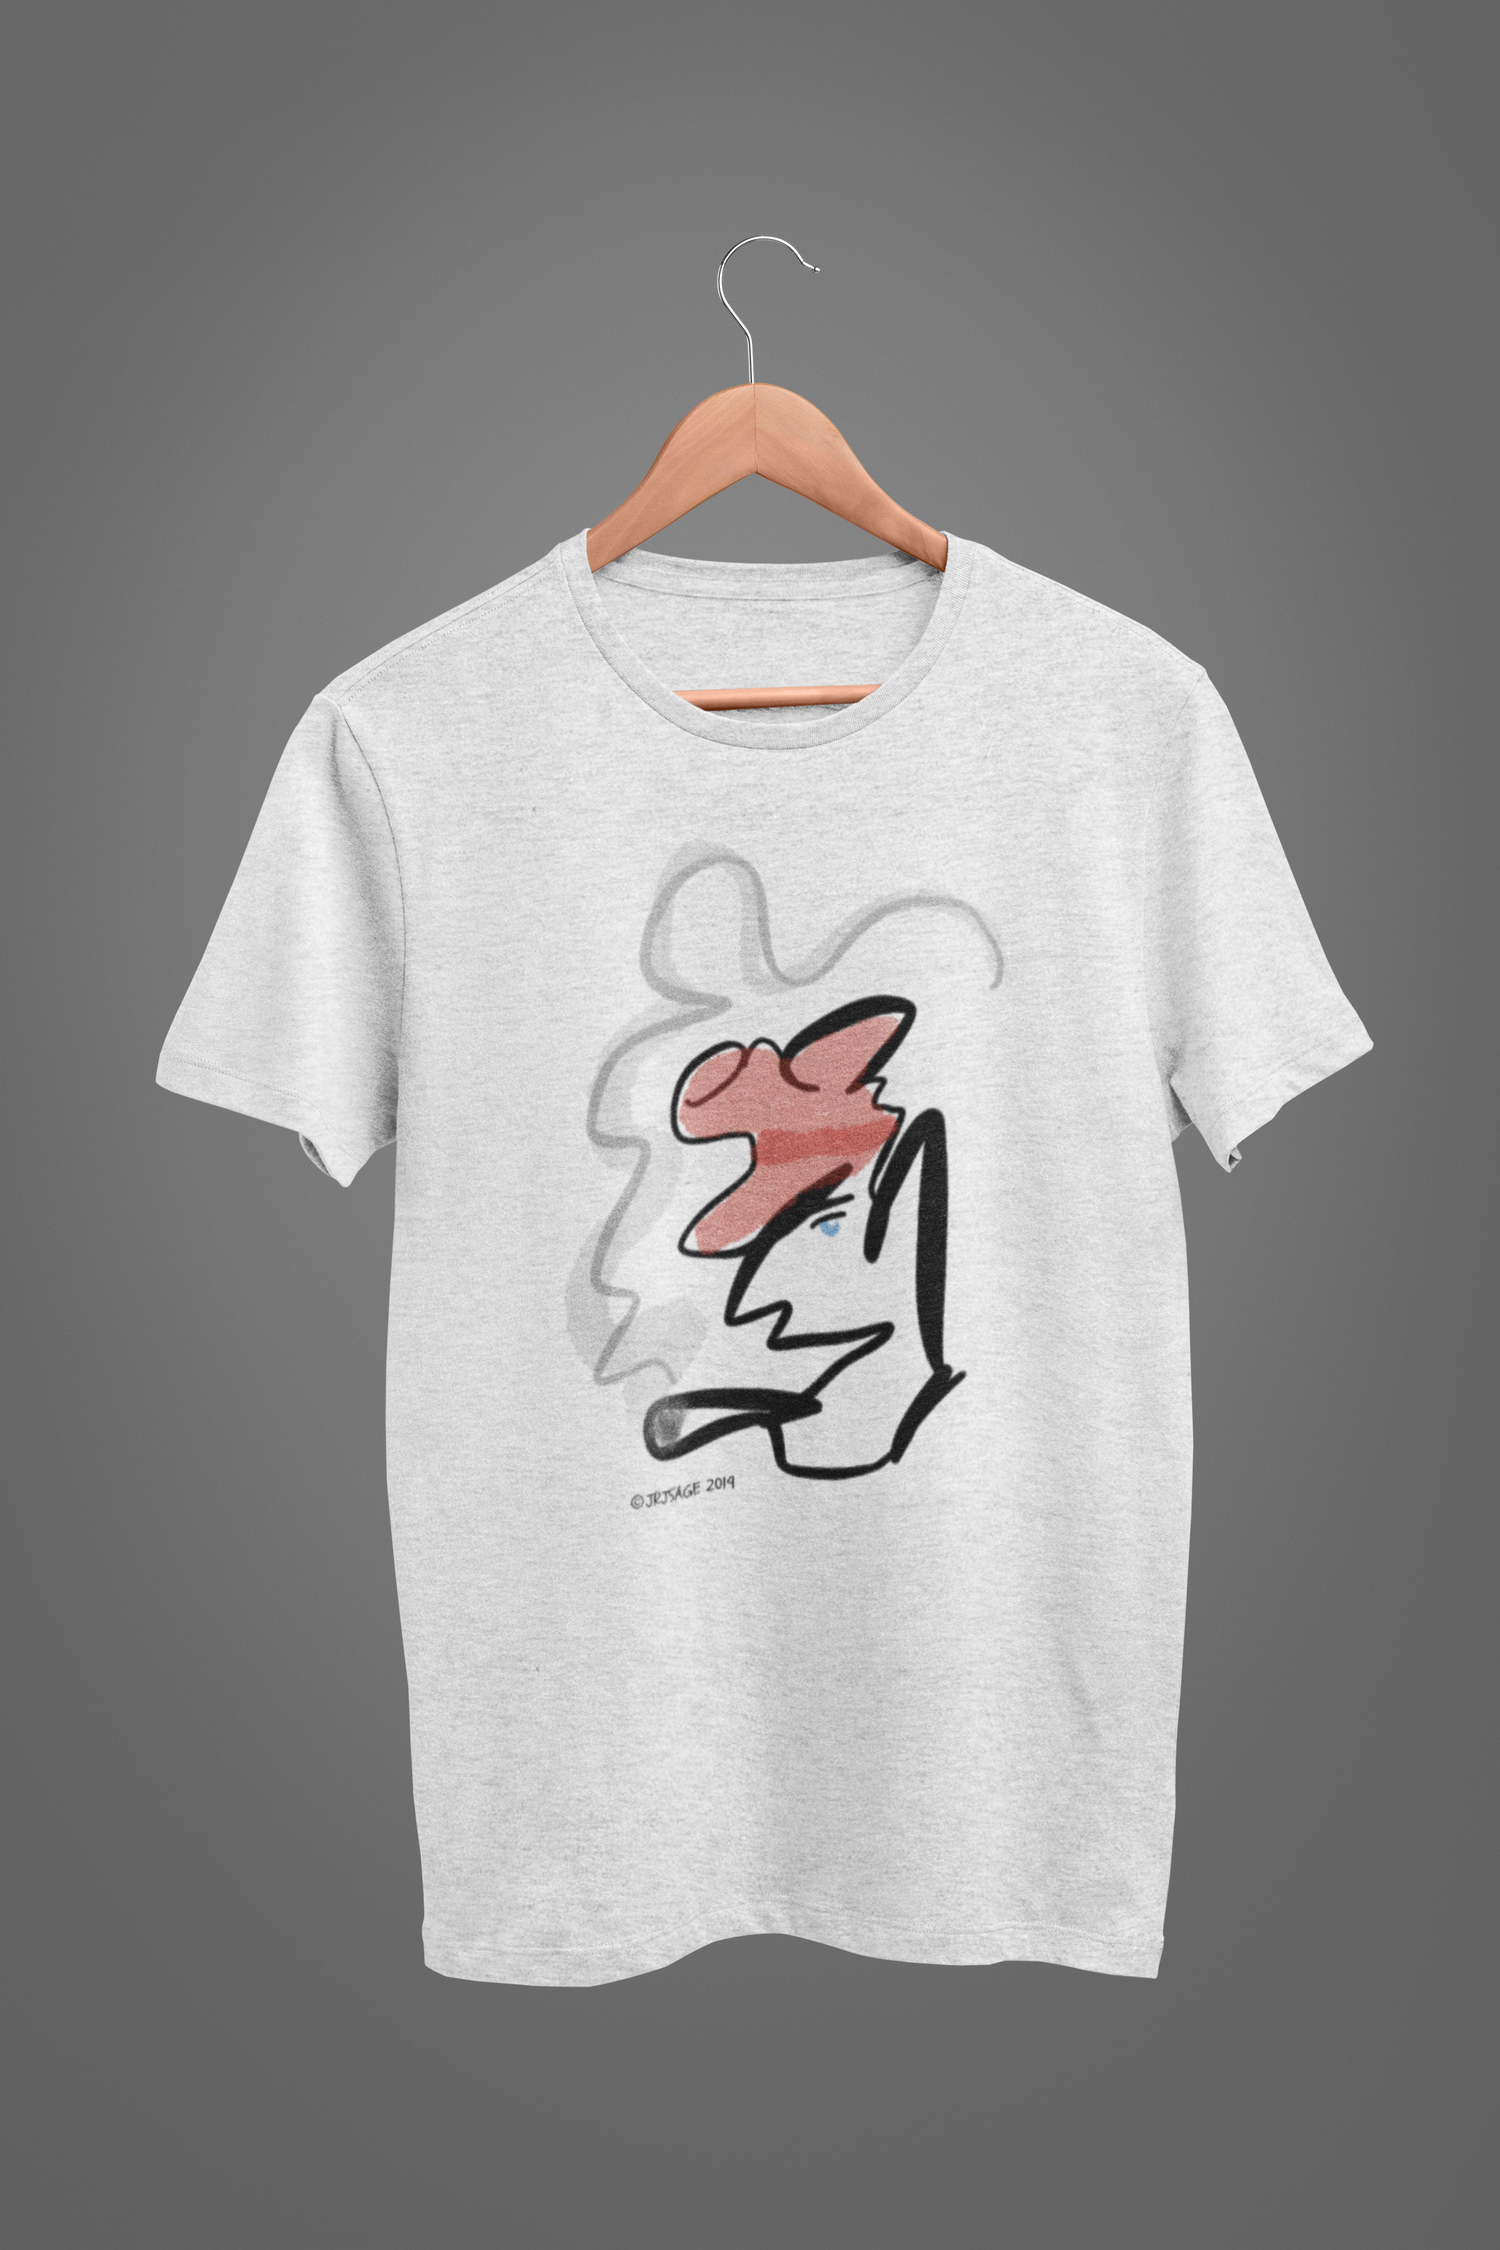 Heather grey quality vegan cotton t-shirt with Hector and Bone Parisian stylised smoking man Monsieur Gaulois illustrated t-shirt design